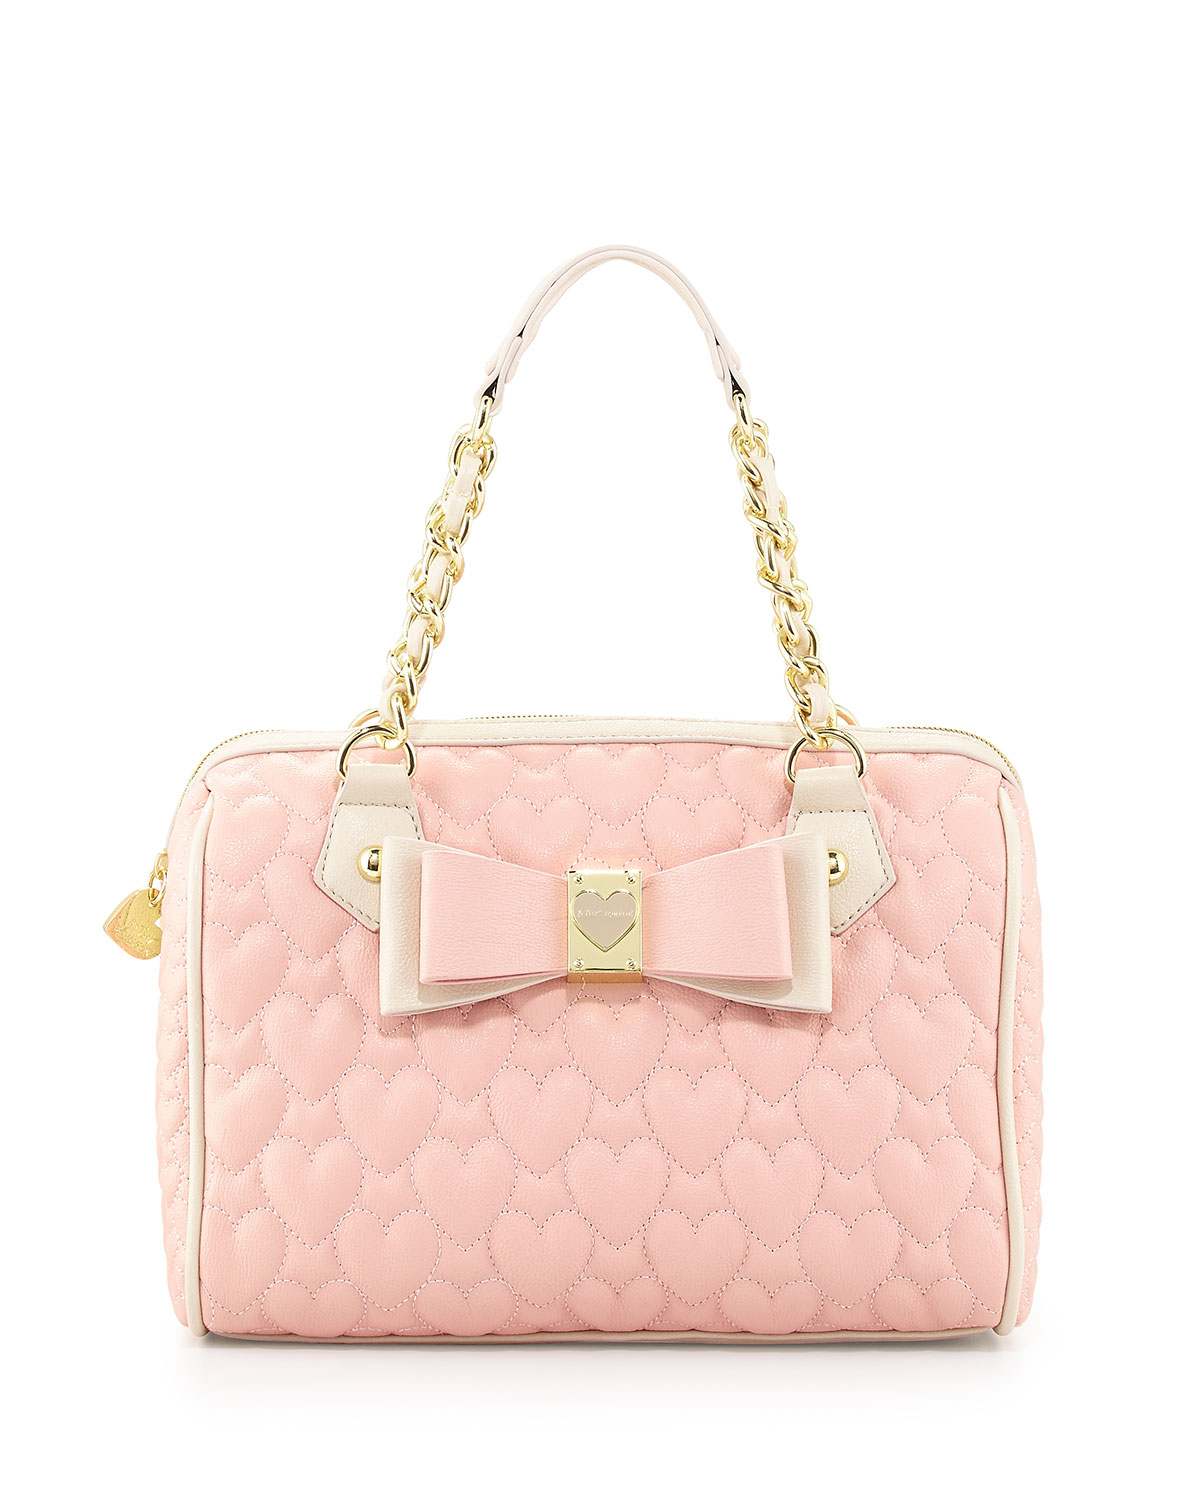 New Betsey Johnson Satchel Pink Heart Handbag | The Art of Mike Mignola